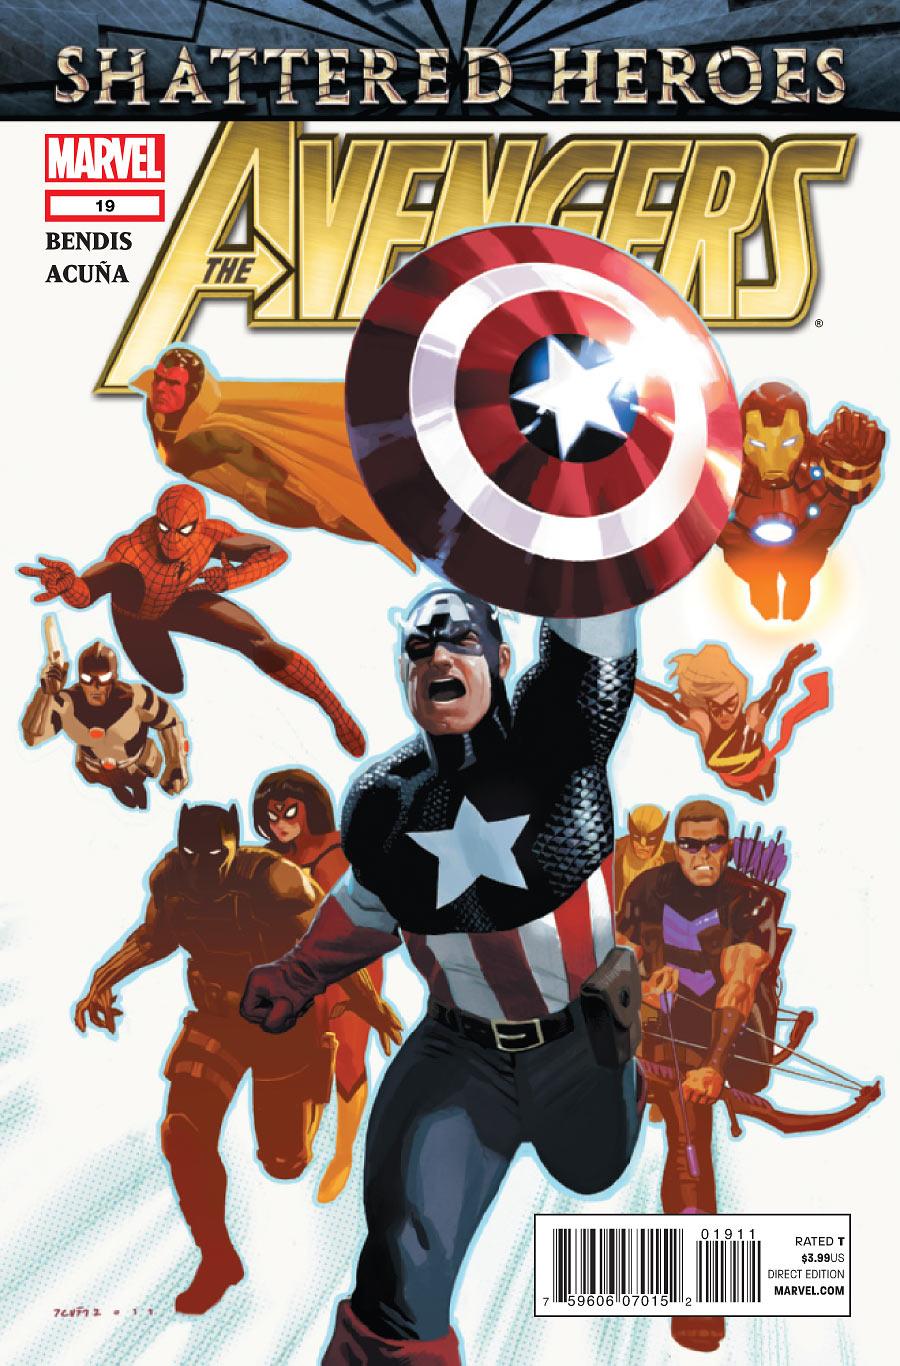 The Avengers Vol. 4 #19